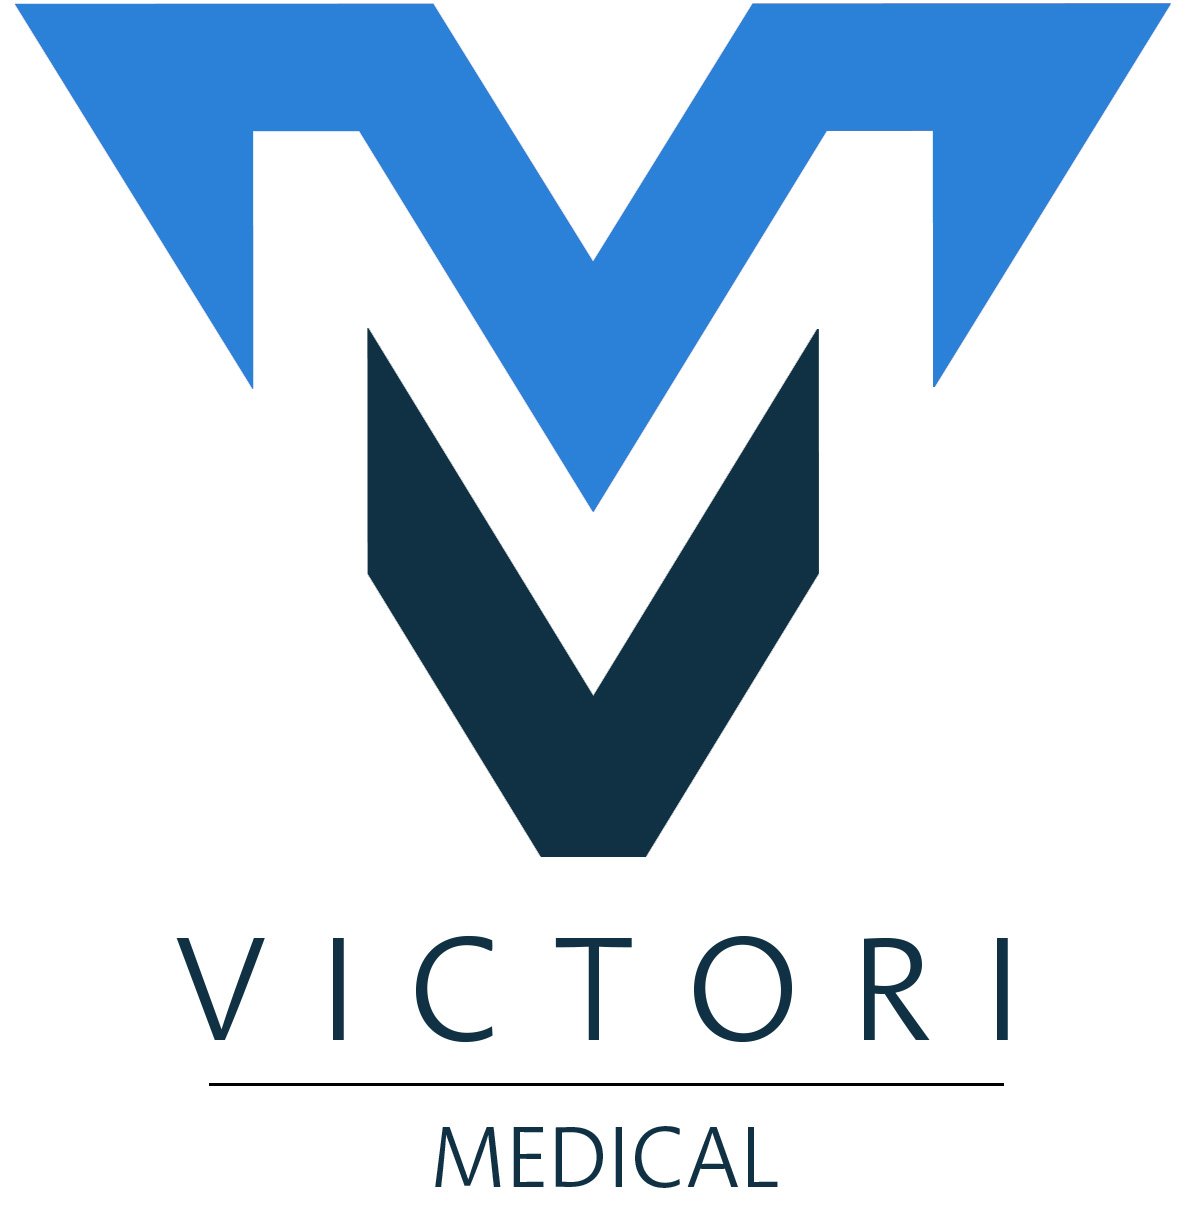 Victori Medical